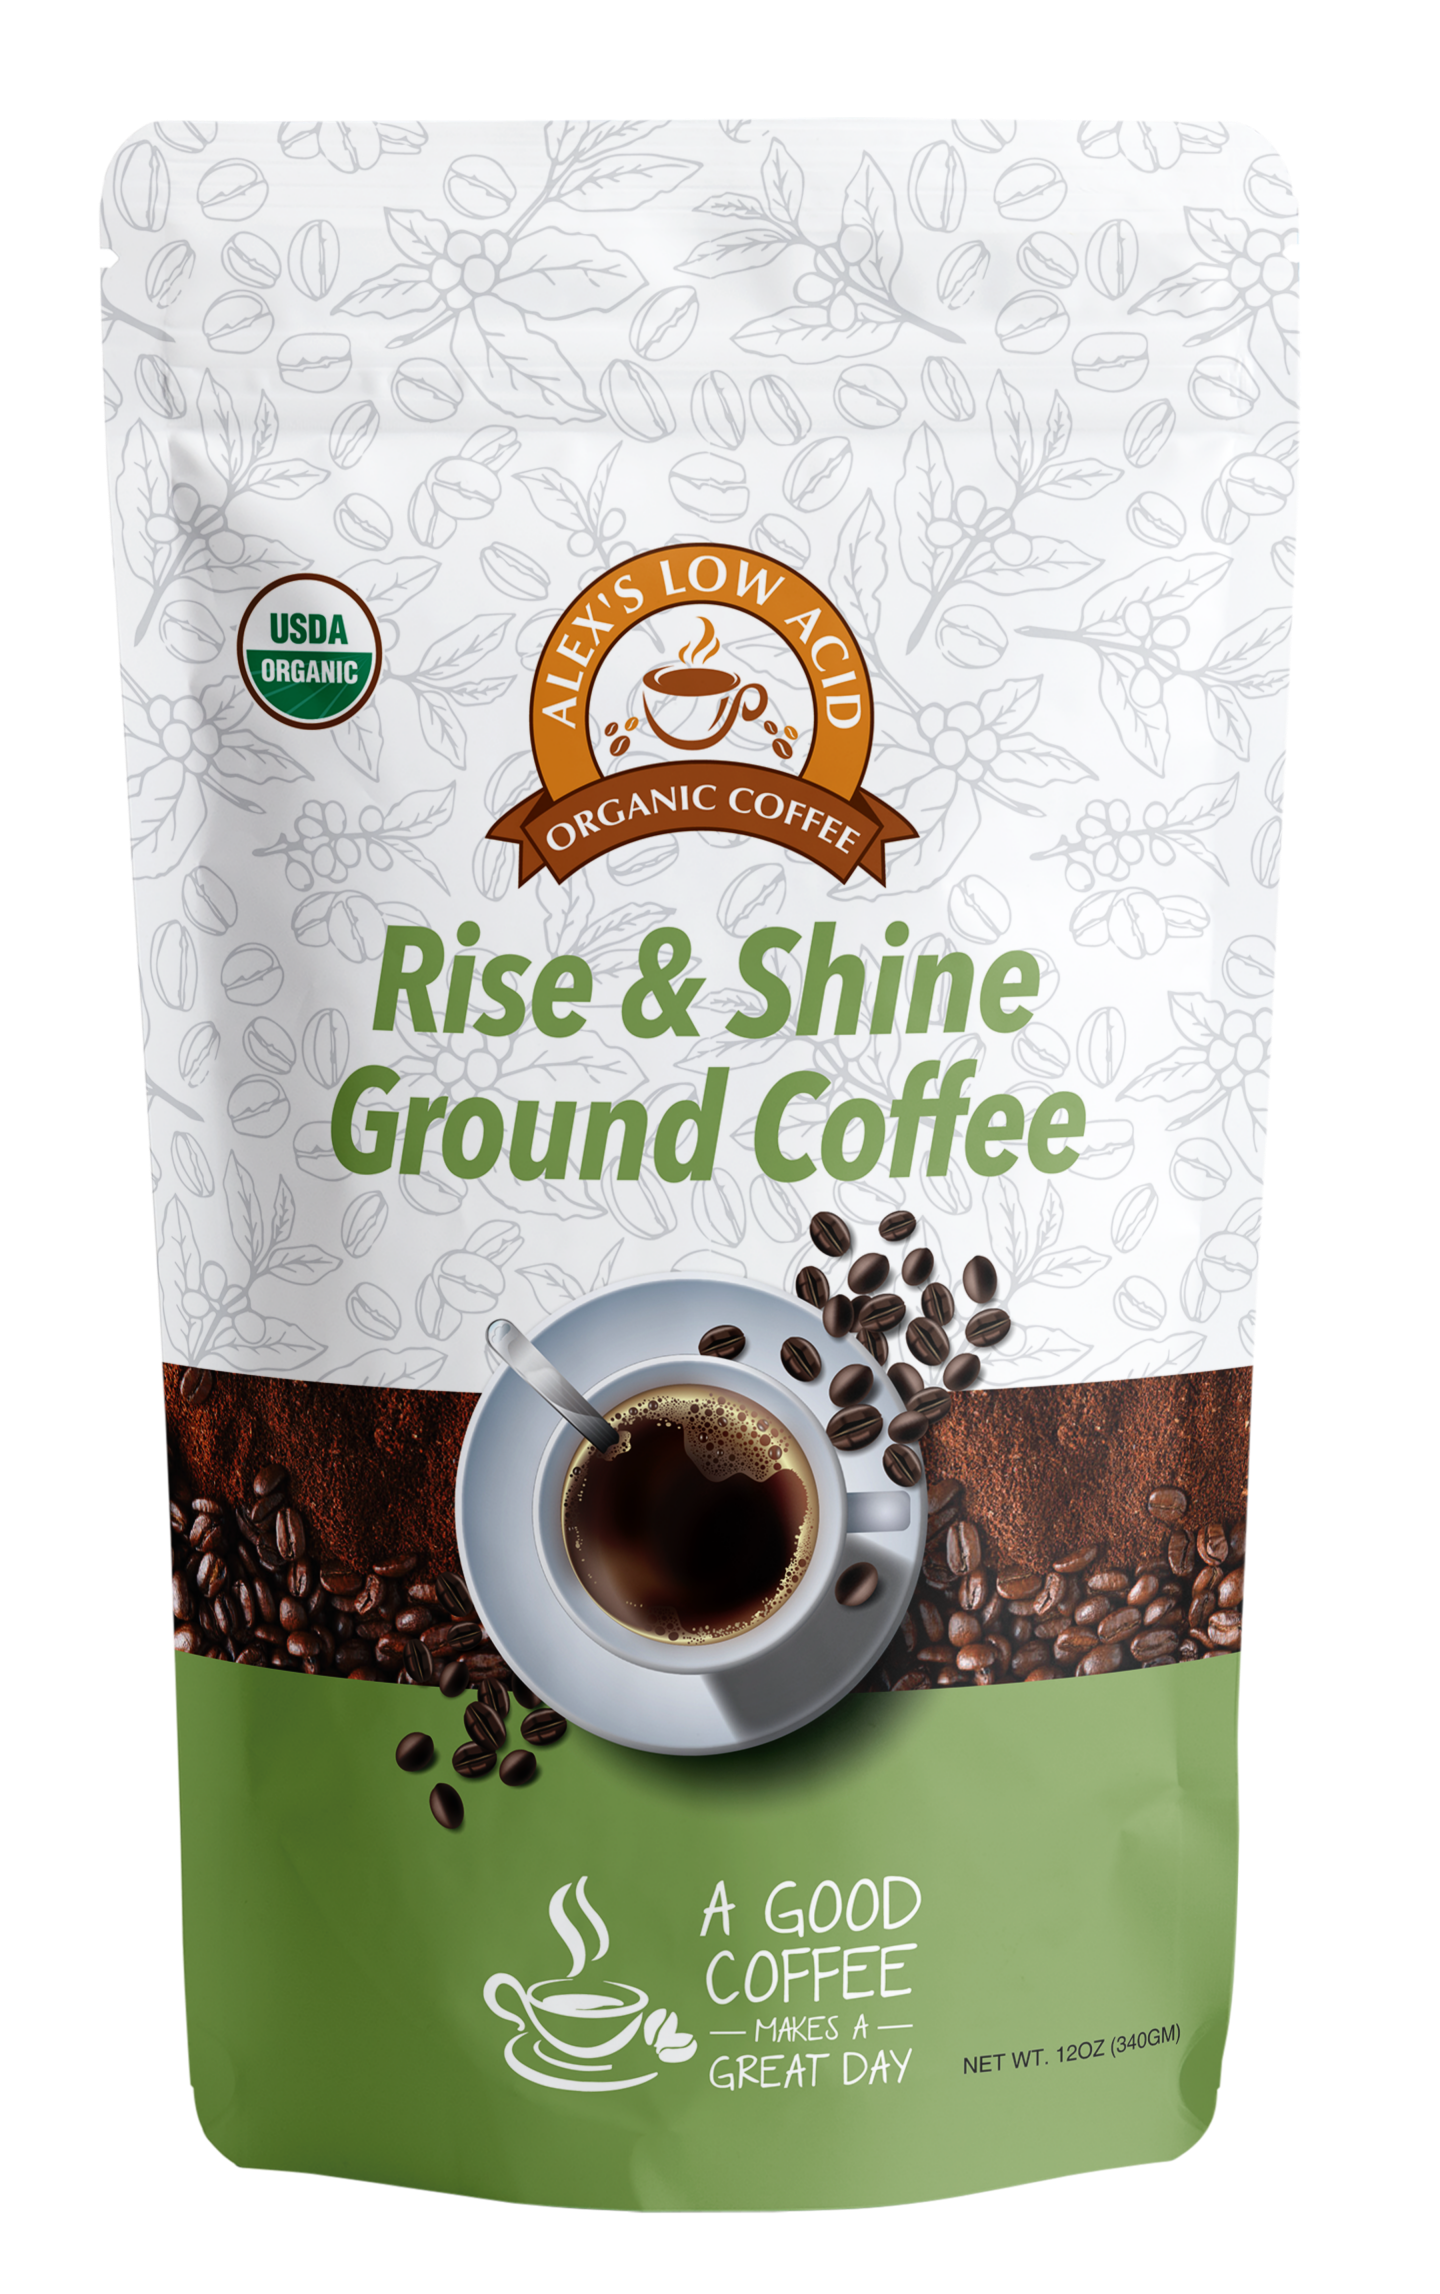 Equal Exchange Coffee, Ground, Breakfast Blend, Organic - 6 x 12 oz